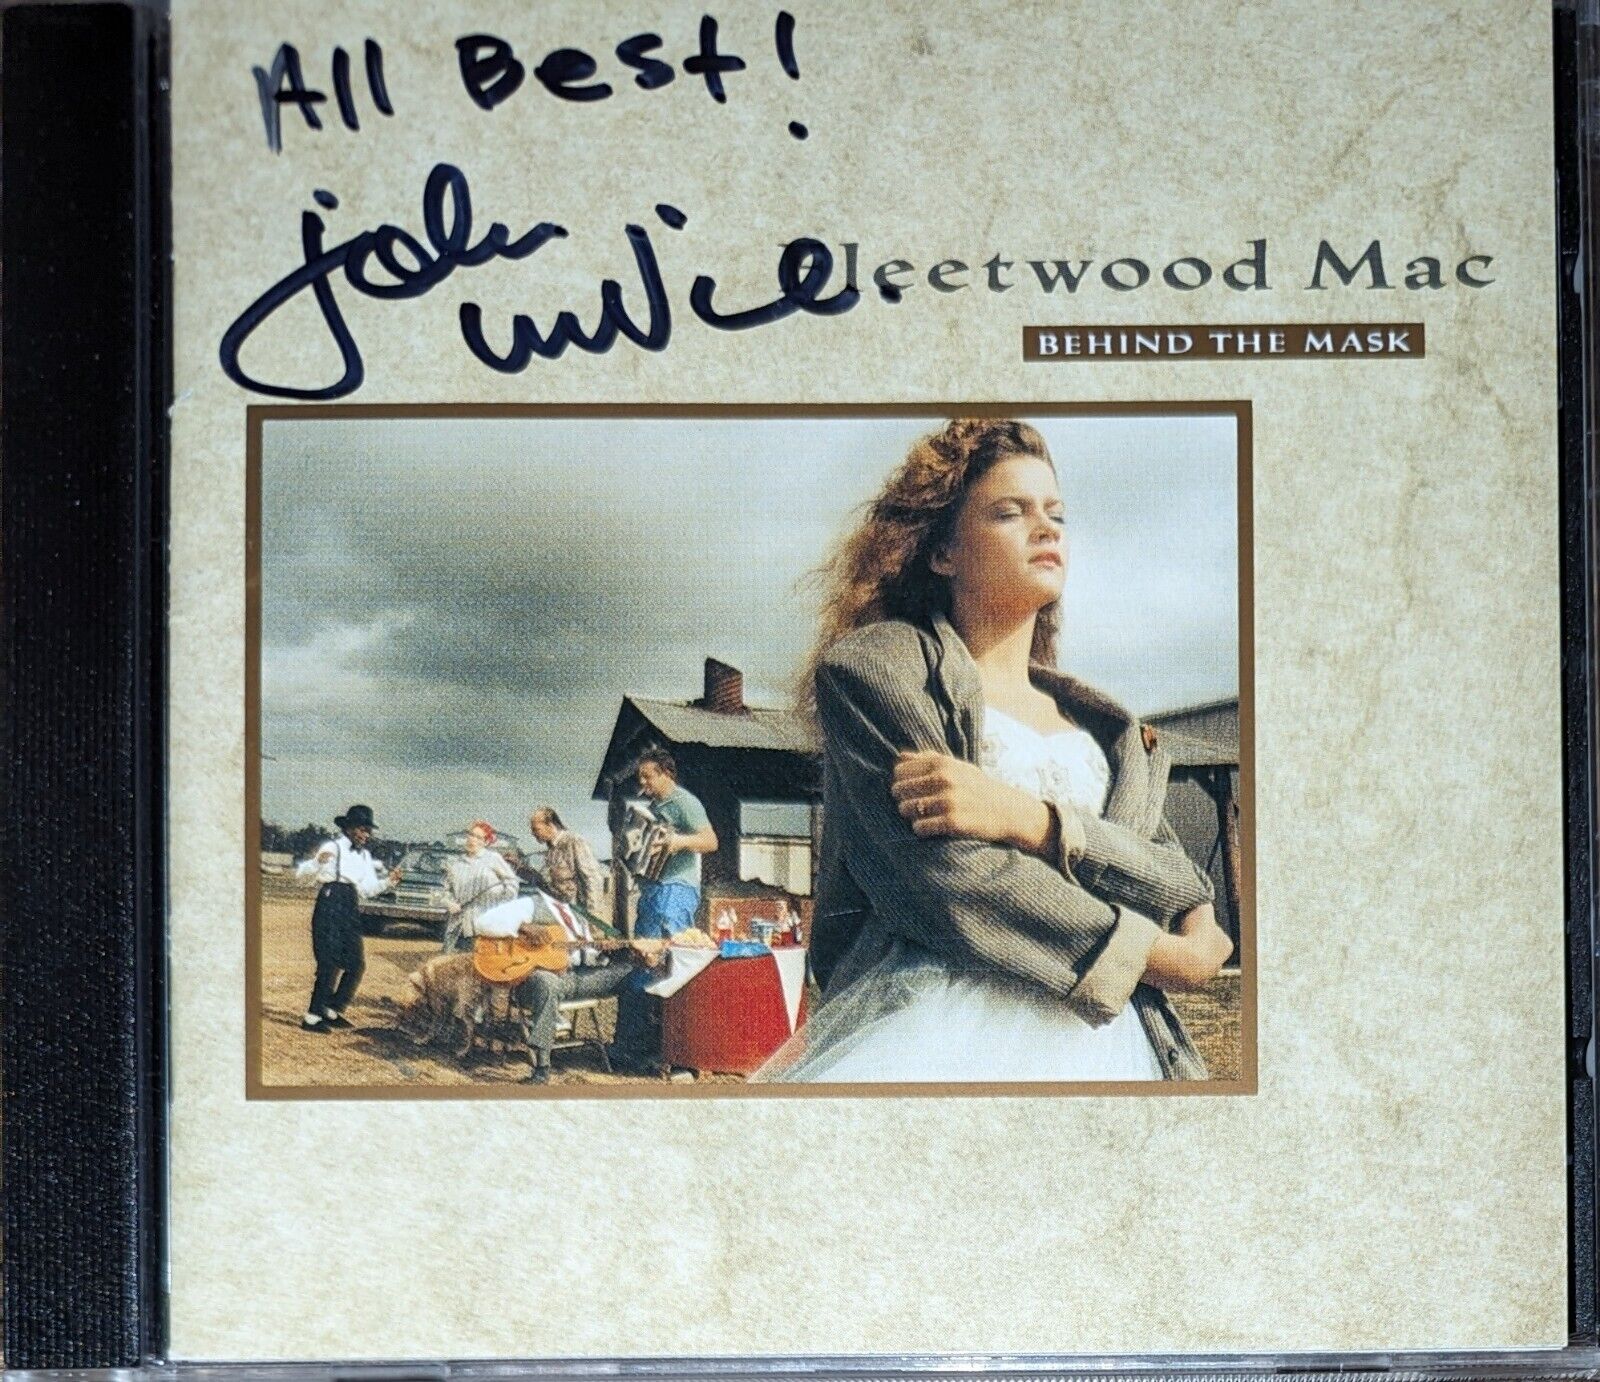 FLEETWOOD MAC (John McVie) Signed/Autographed CD